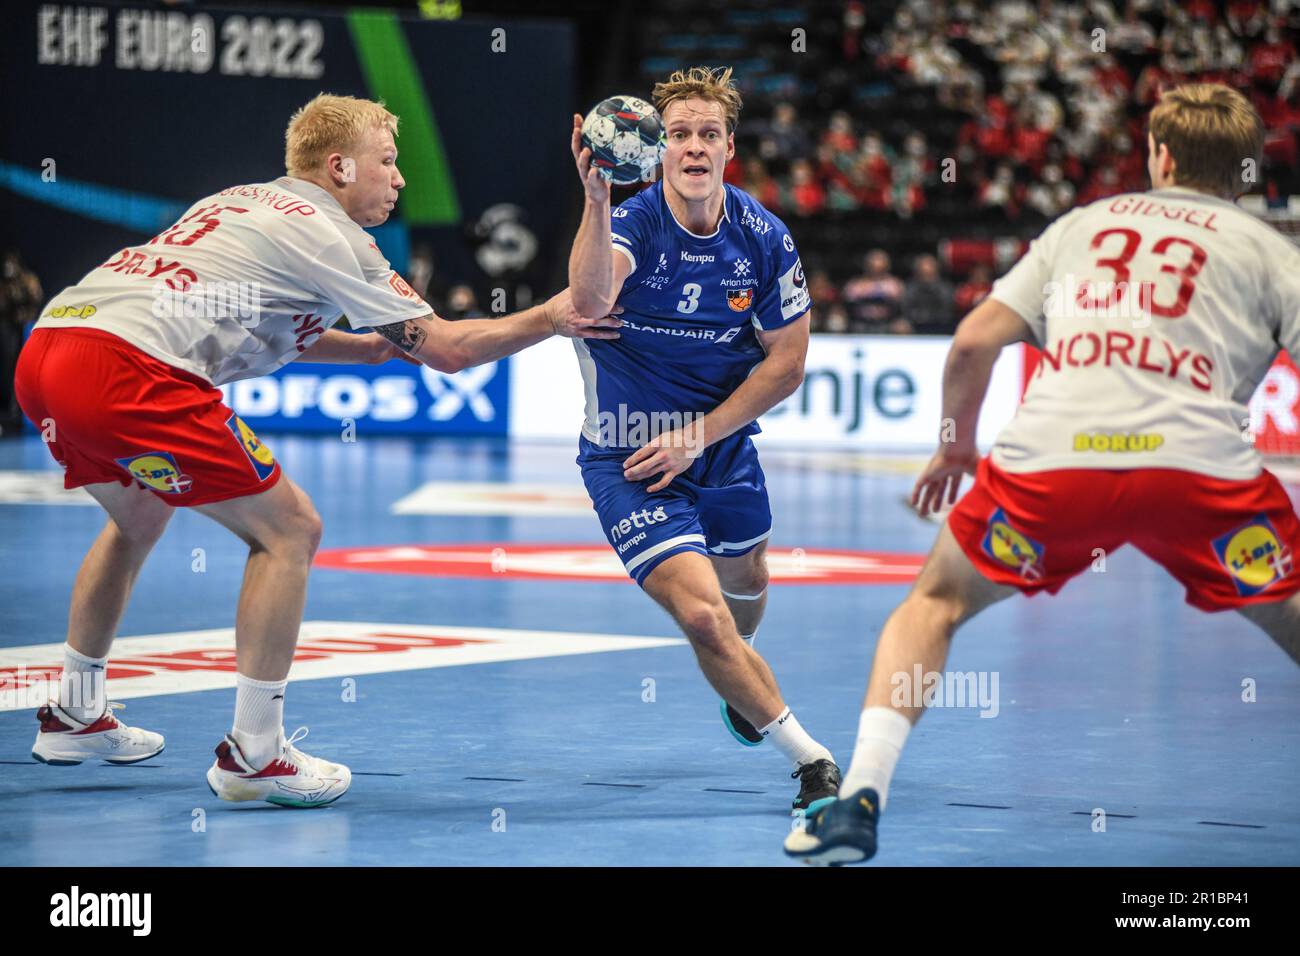 Janus smarason handball hi-res stock photography and images - Alamy